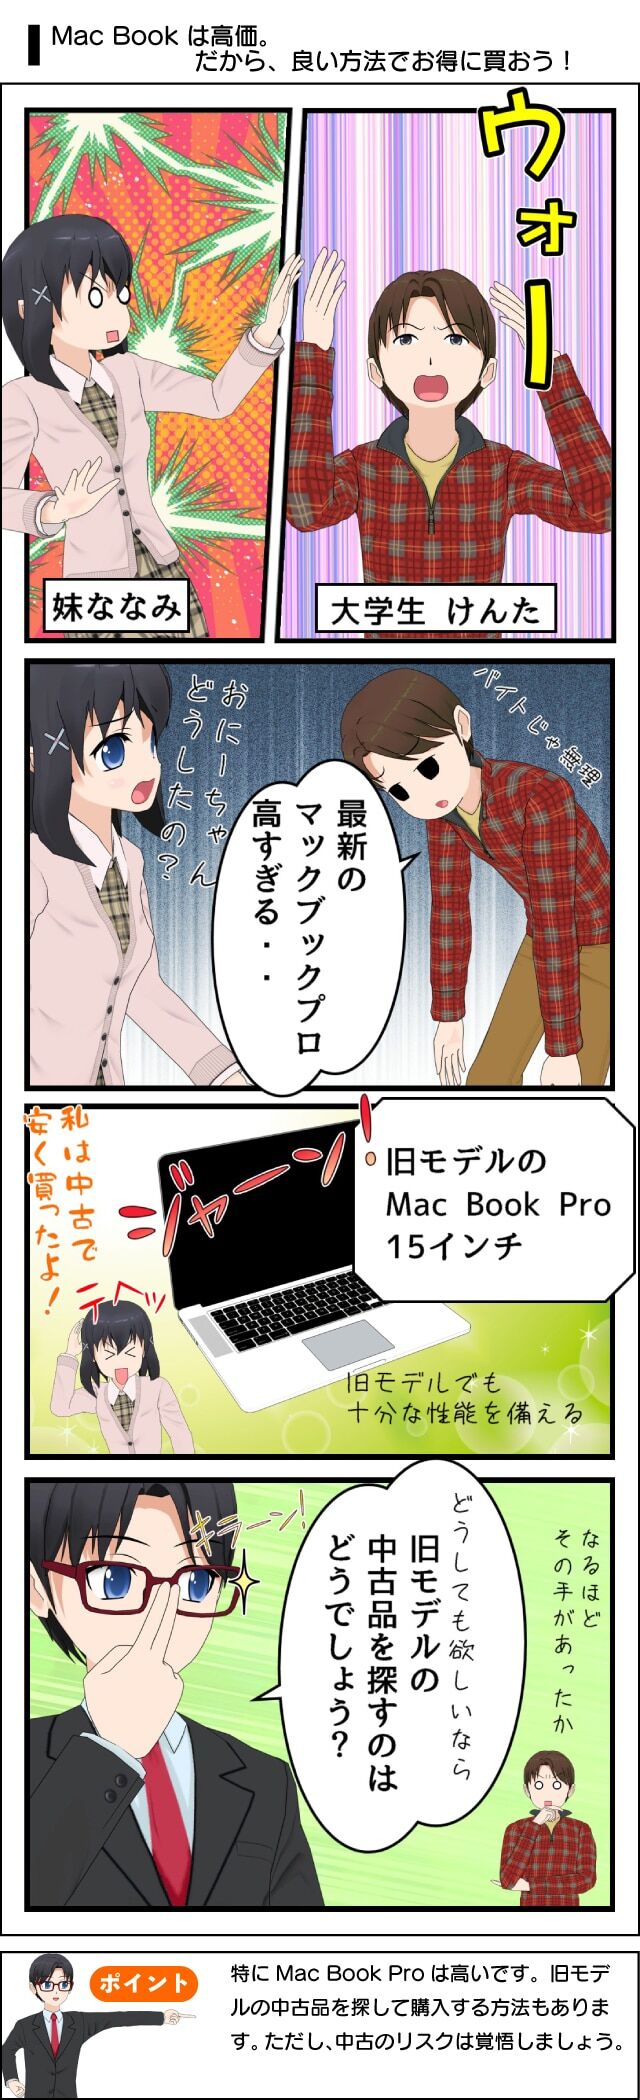 Macbookproは旧モデルでも十分な性能で、安く買えるよ